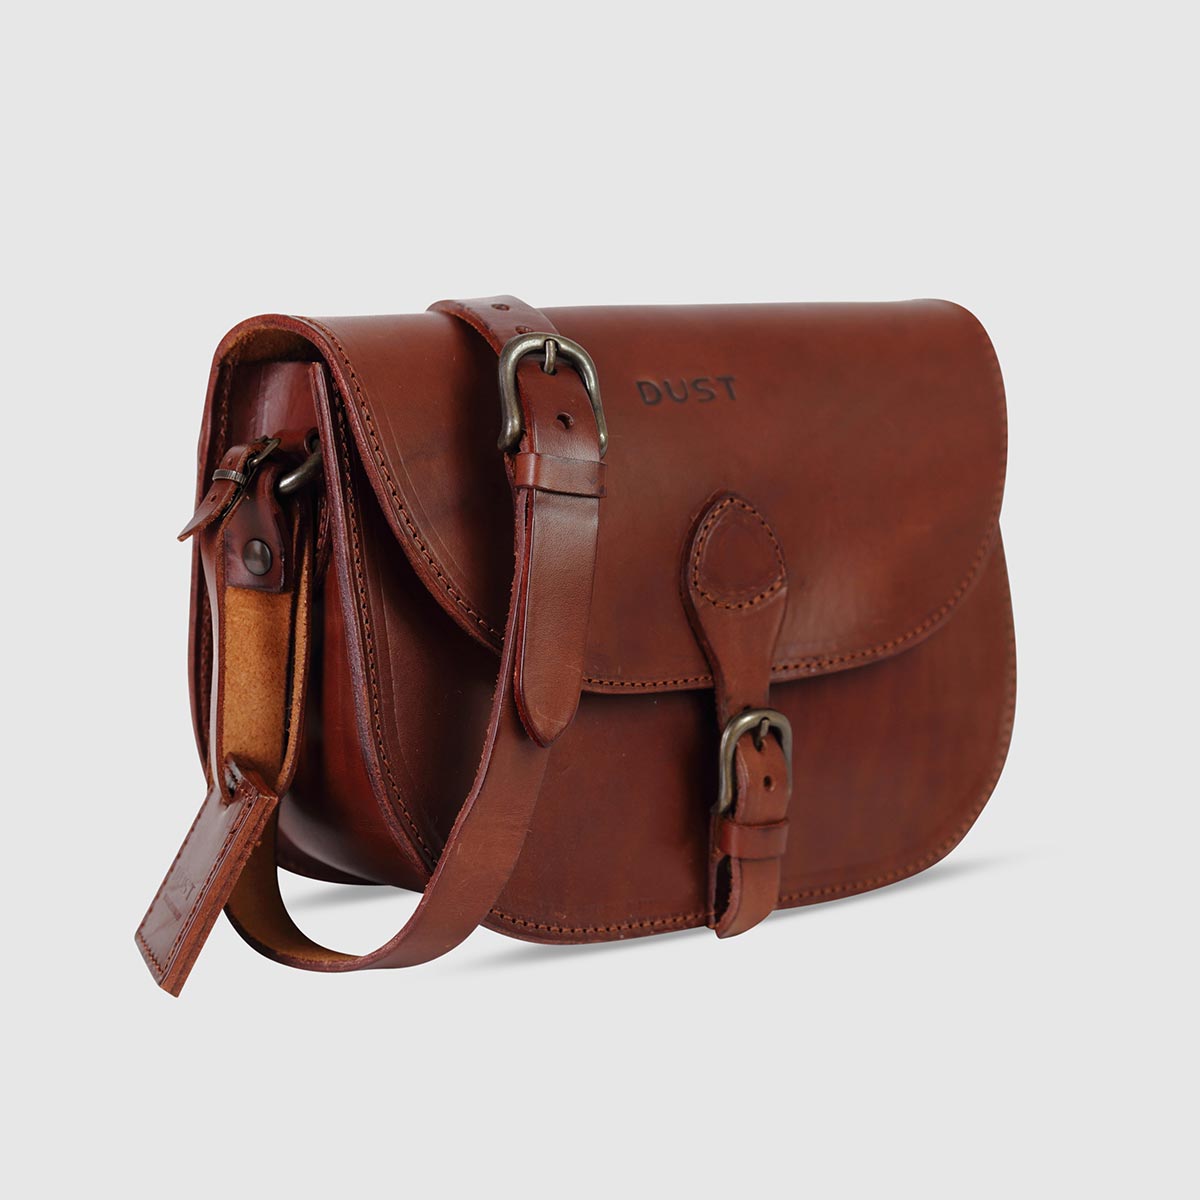 Minimal Shoulder Bag – Havana Leather The Dust on sale 2022 2